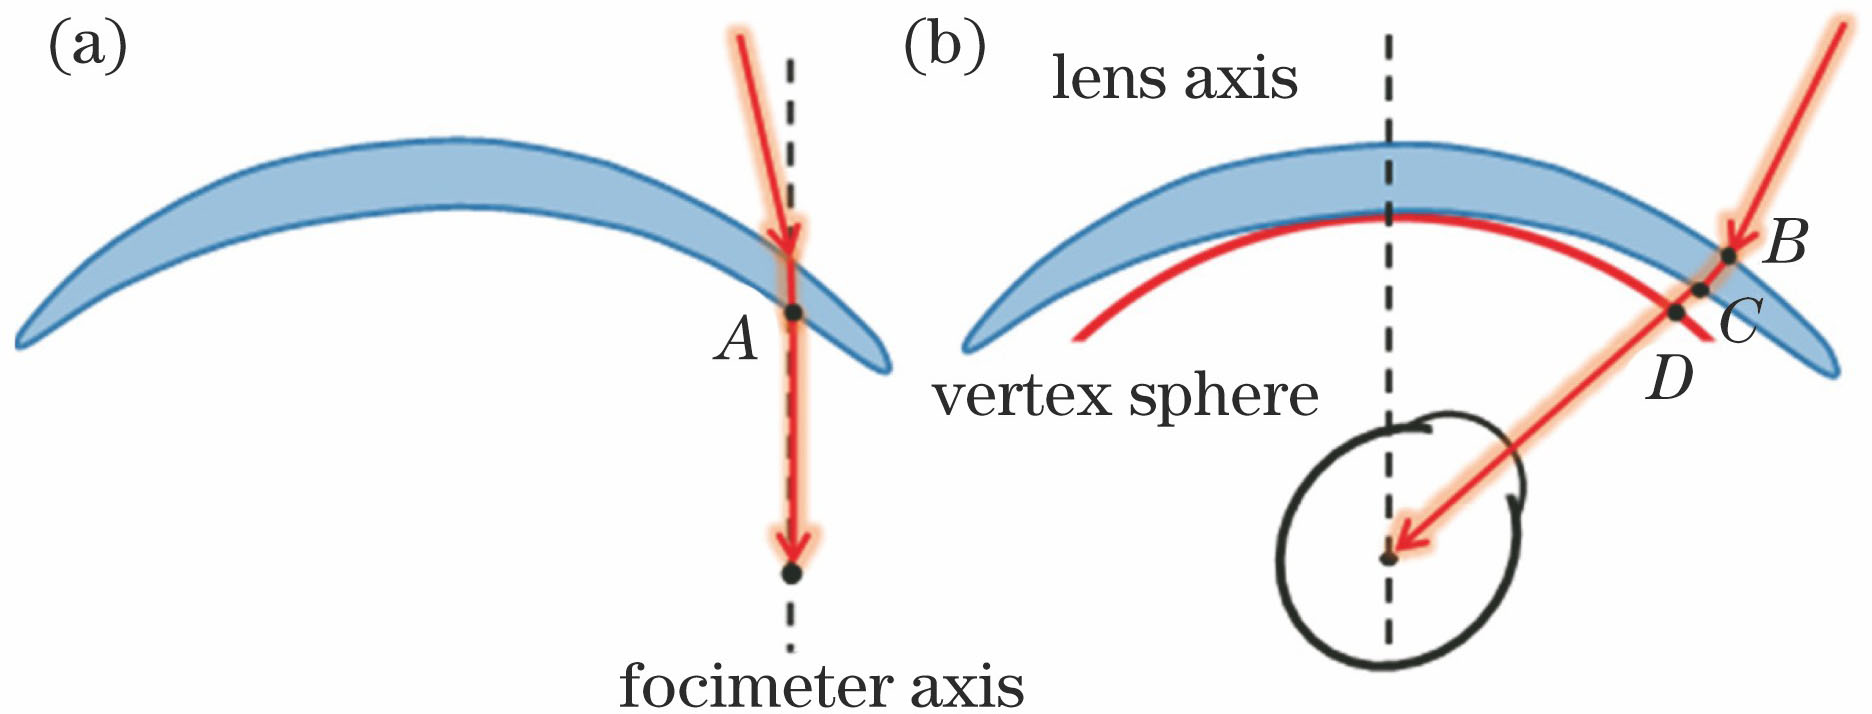 (a) Measurement principle of focimeter; (b) measurement principle in real viewing condition